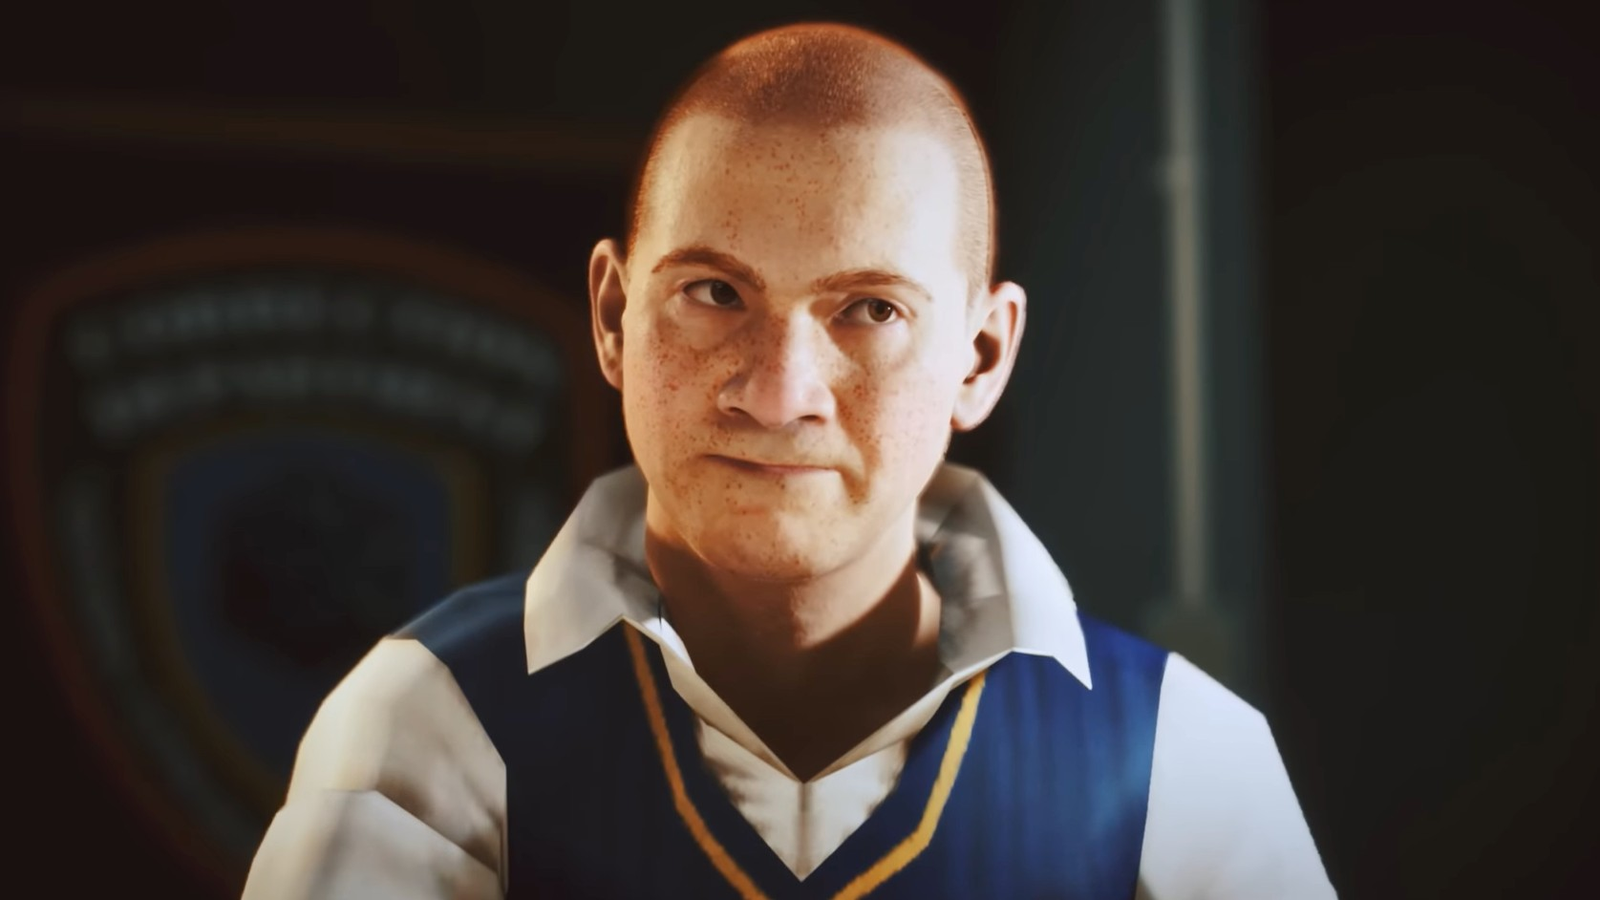 Former Rockstar Games lead developer reveals Bully 2 details - Xfire